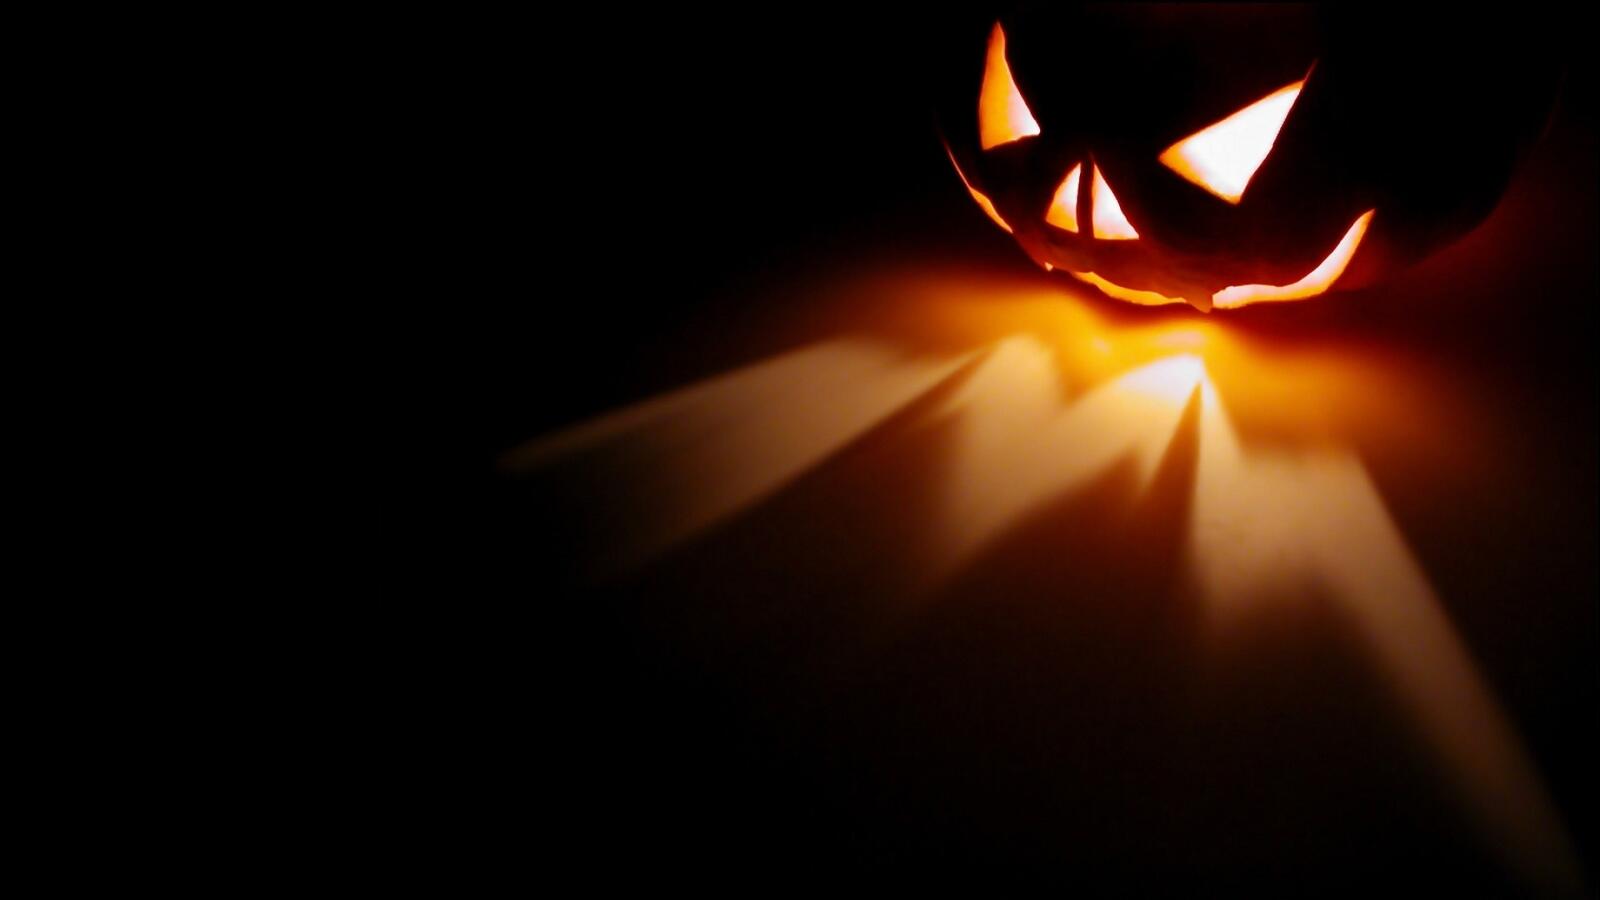 Free photo A Halloween pumpkin emits light in the darkness